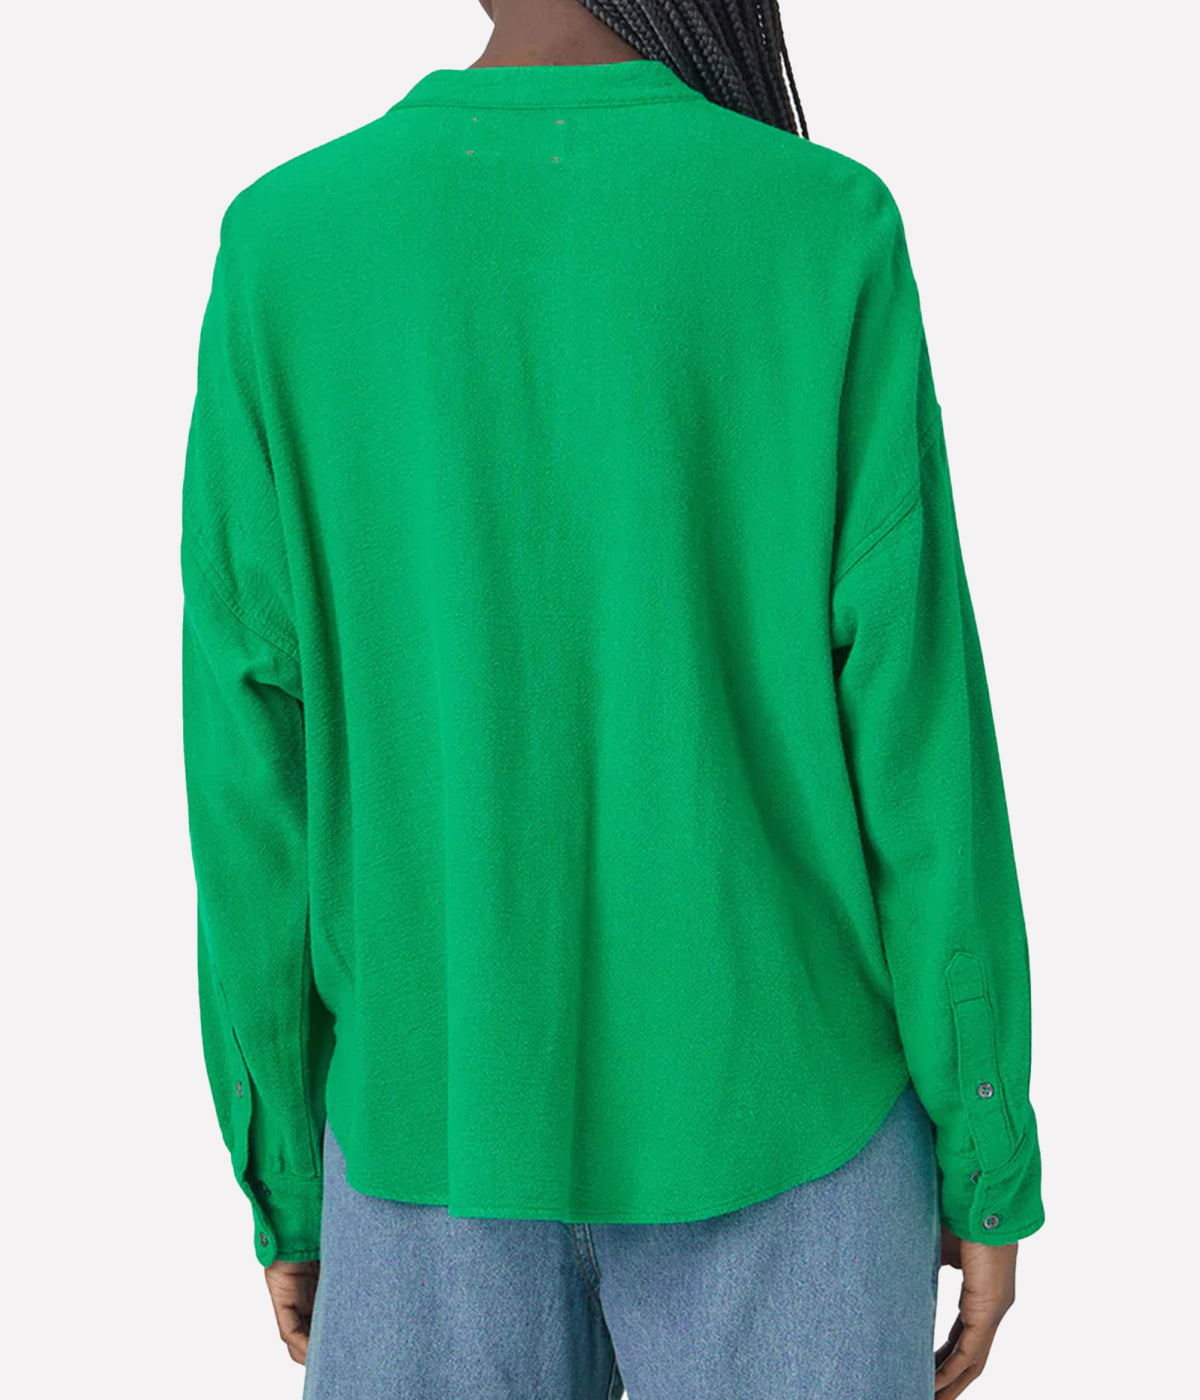 Presley Shirt Emerald Green